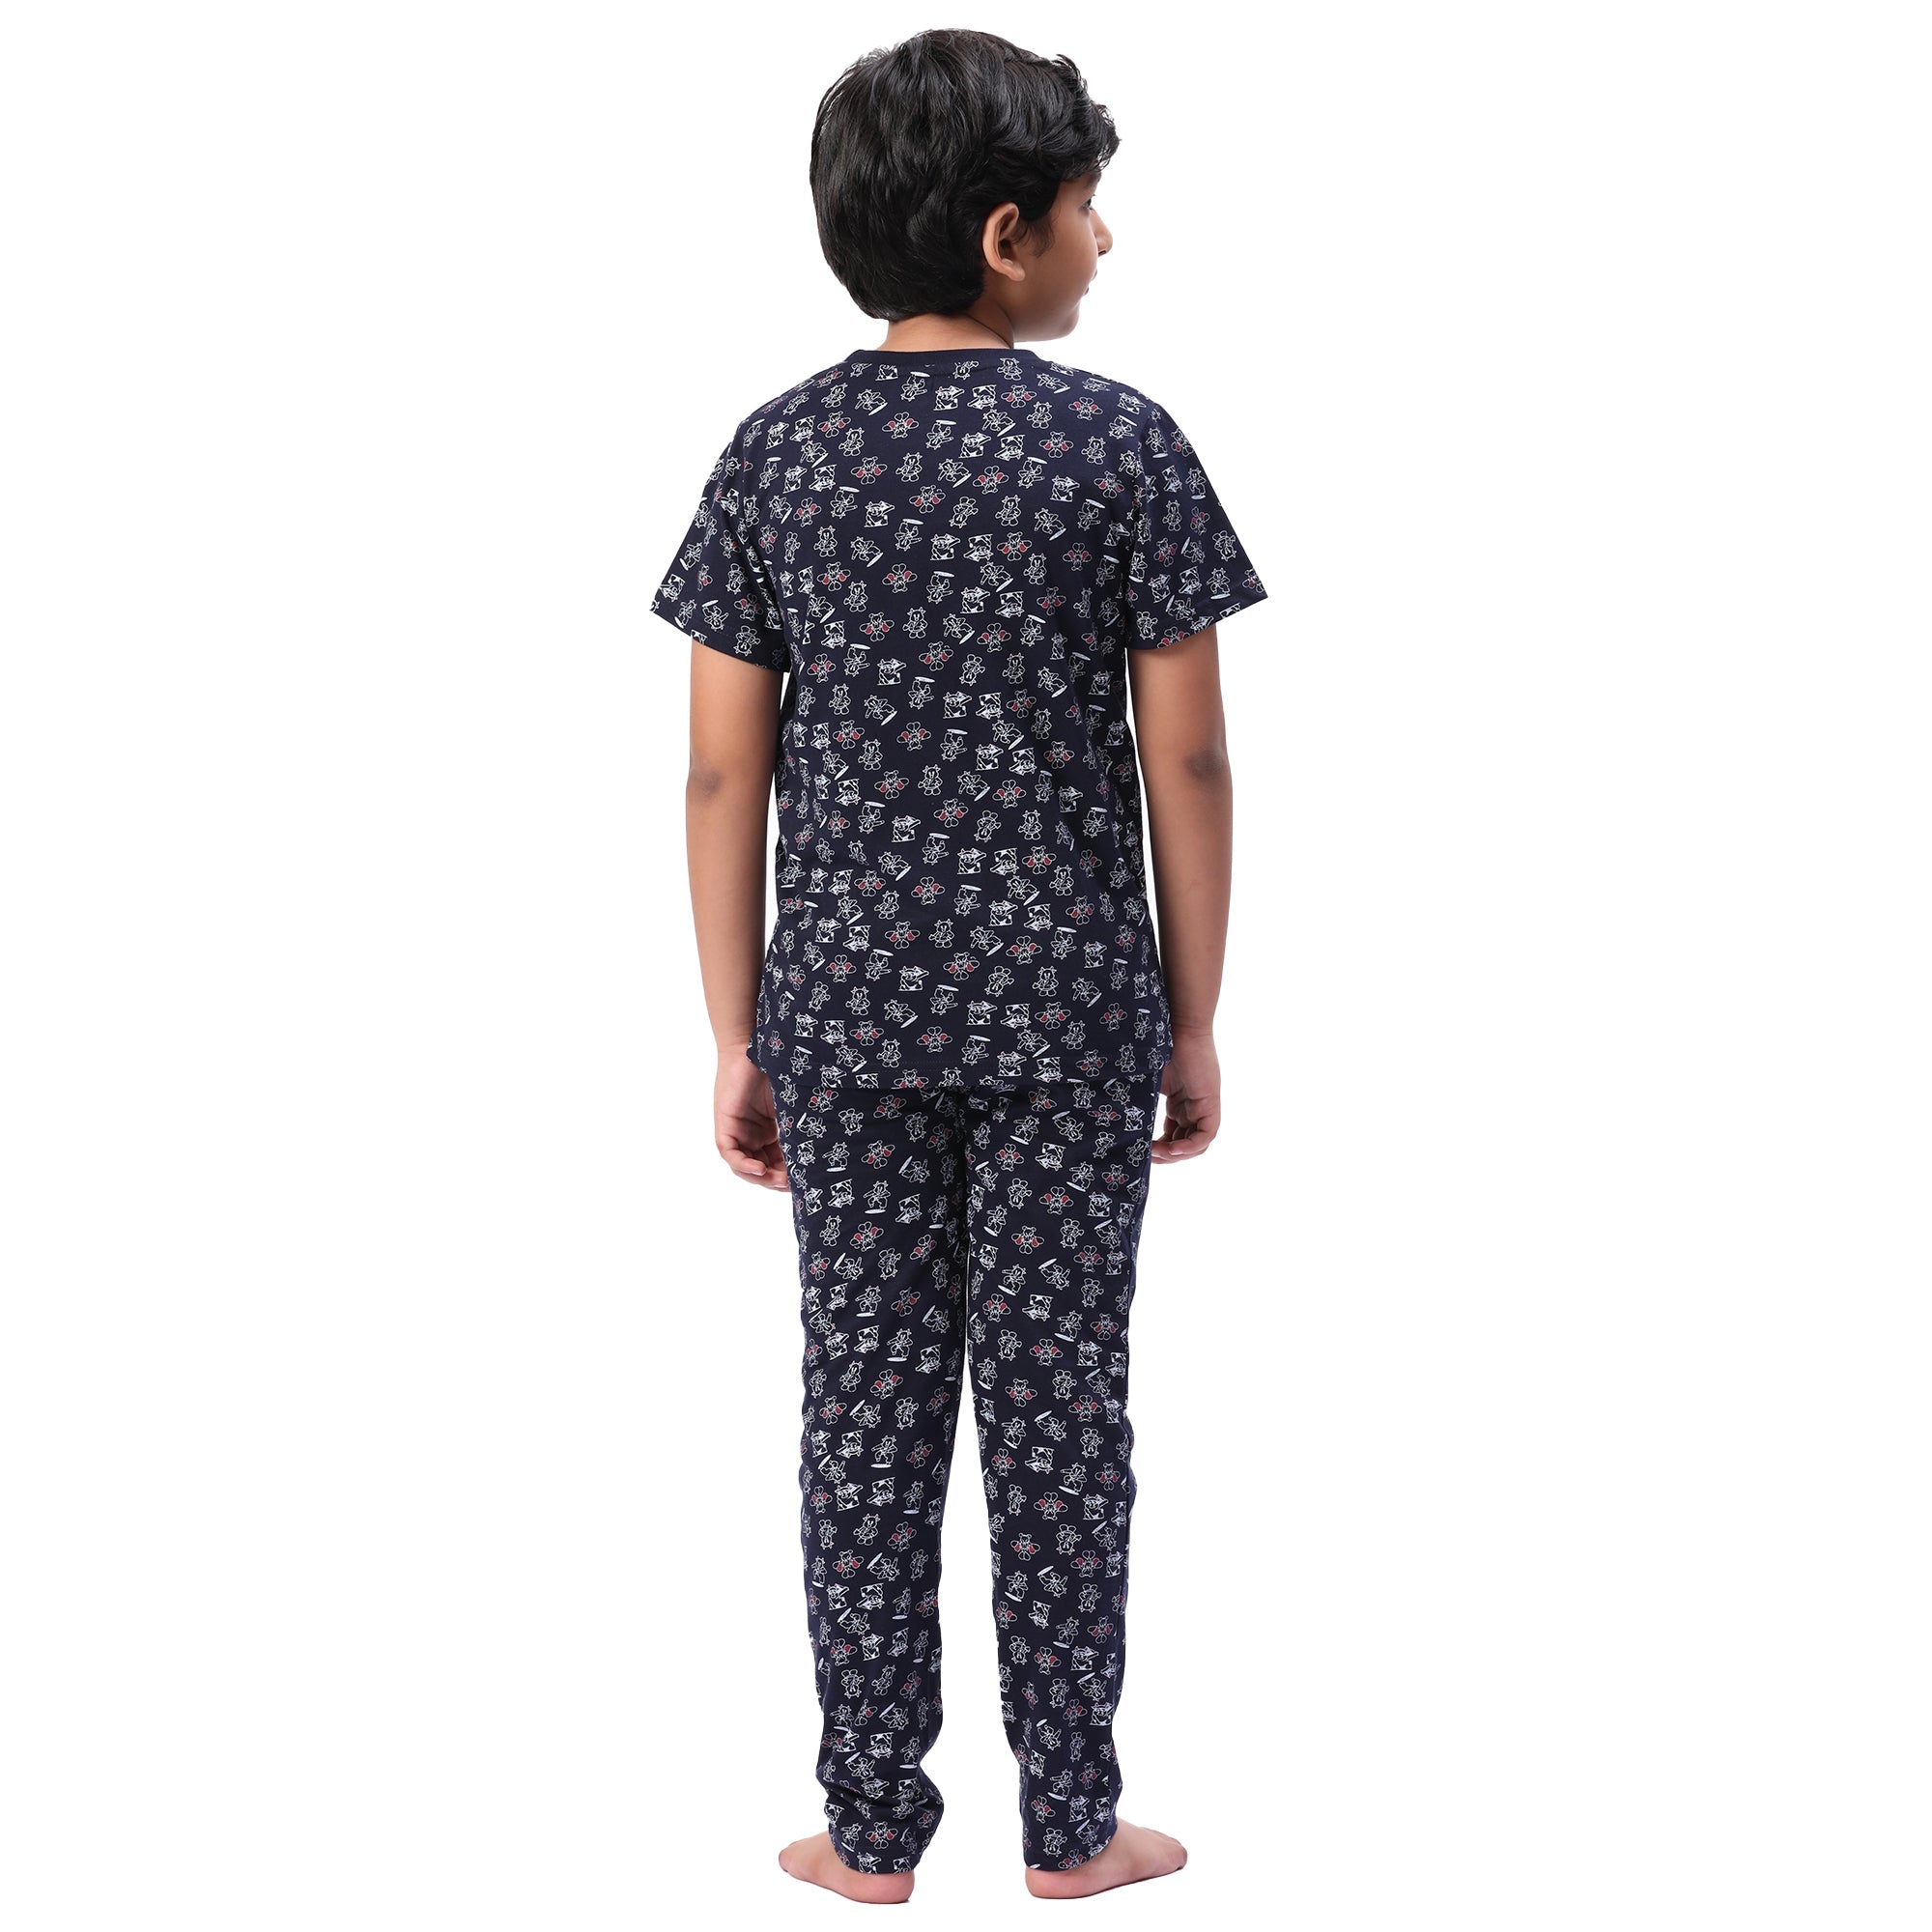 Poomer Kidssy Pyjama Set Combo 2